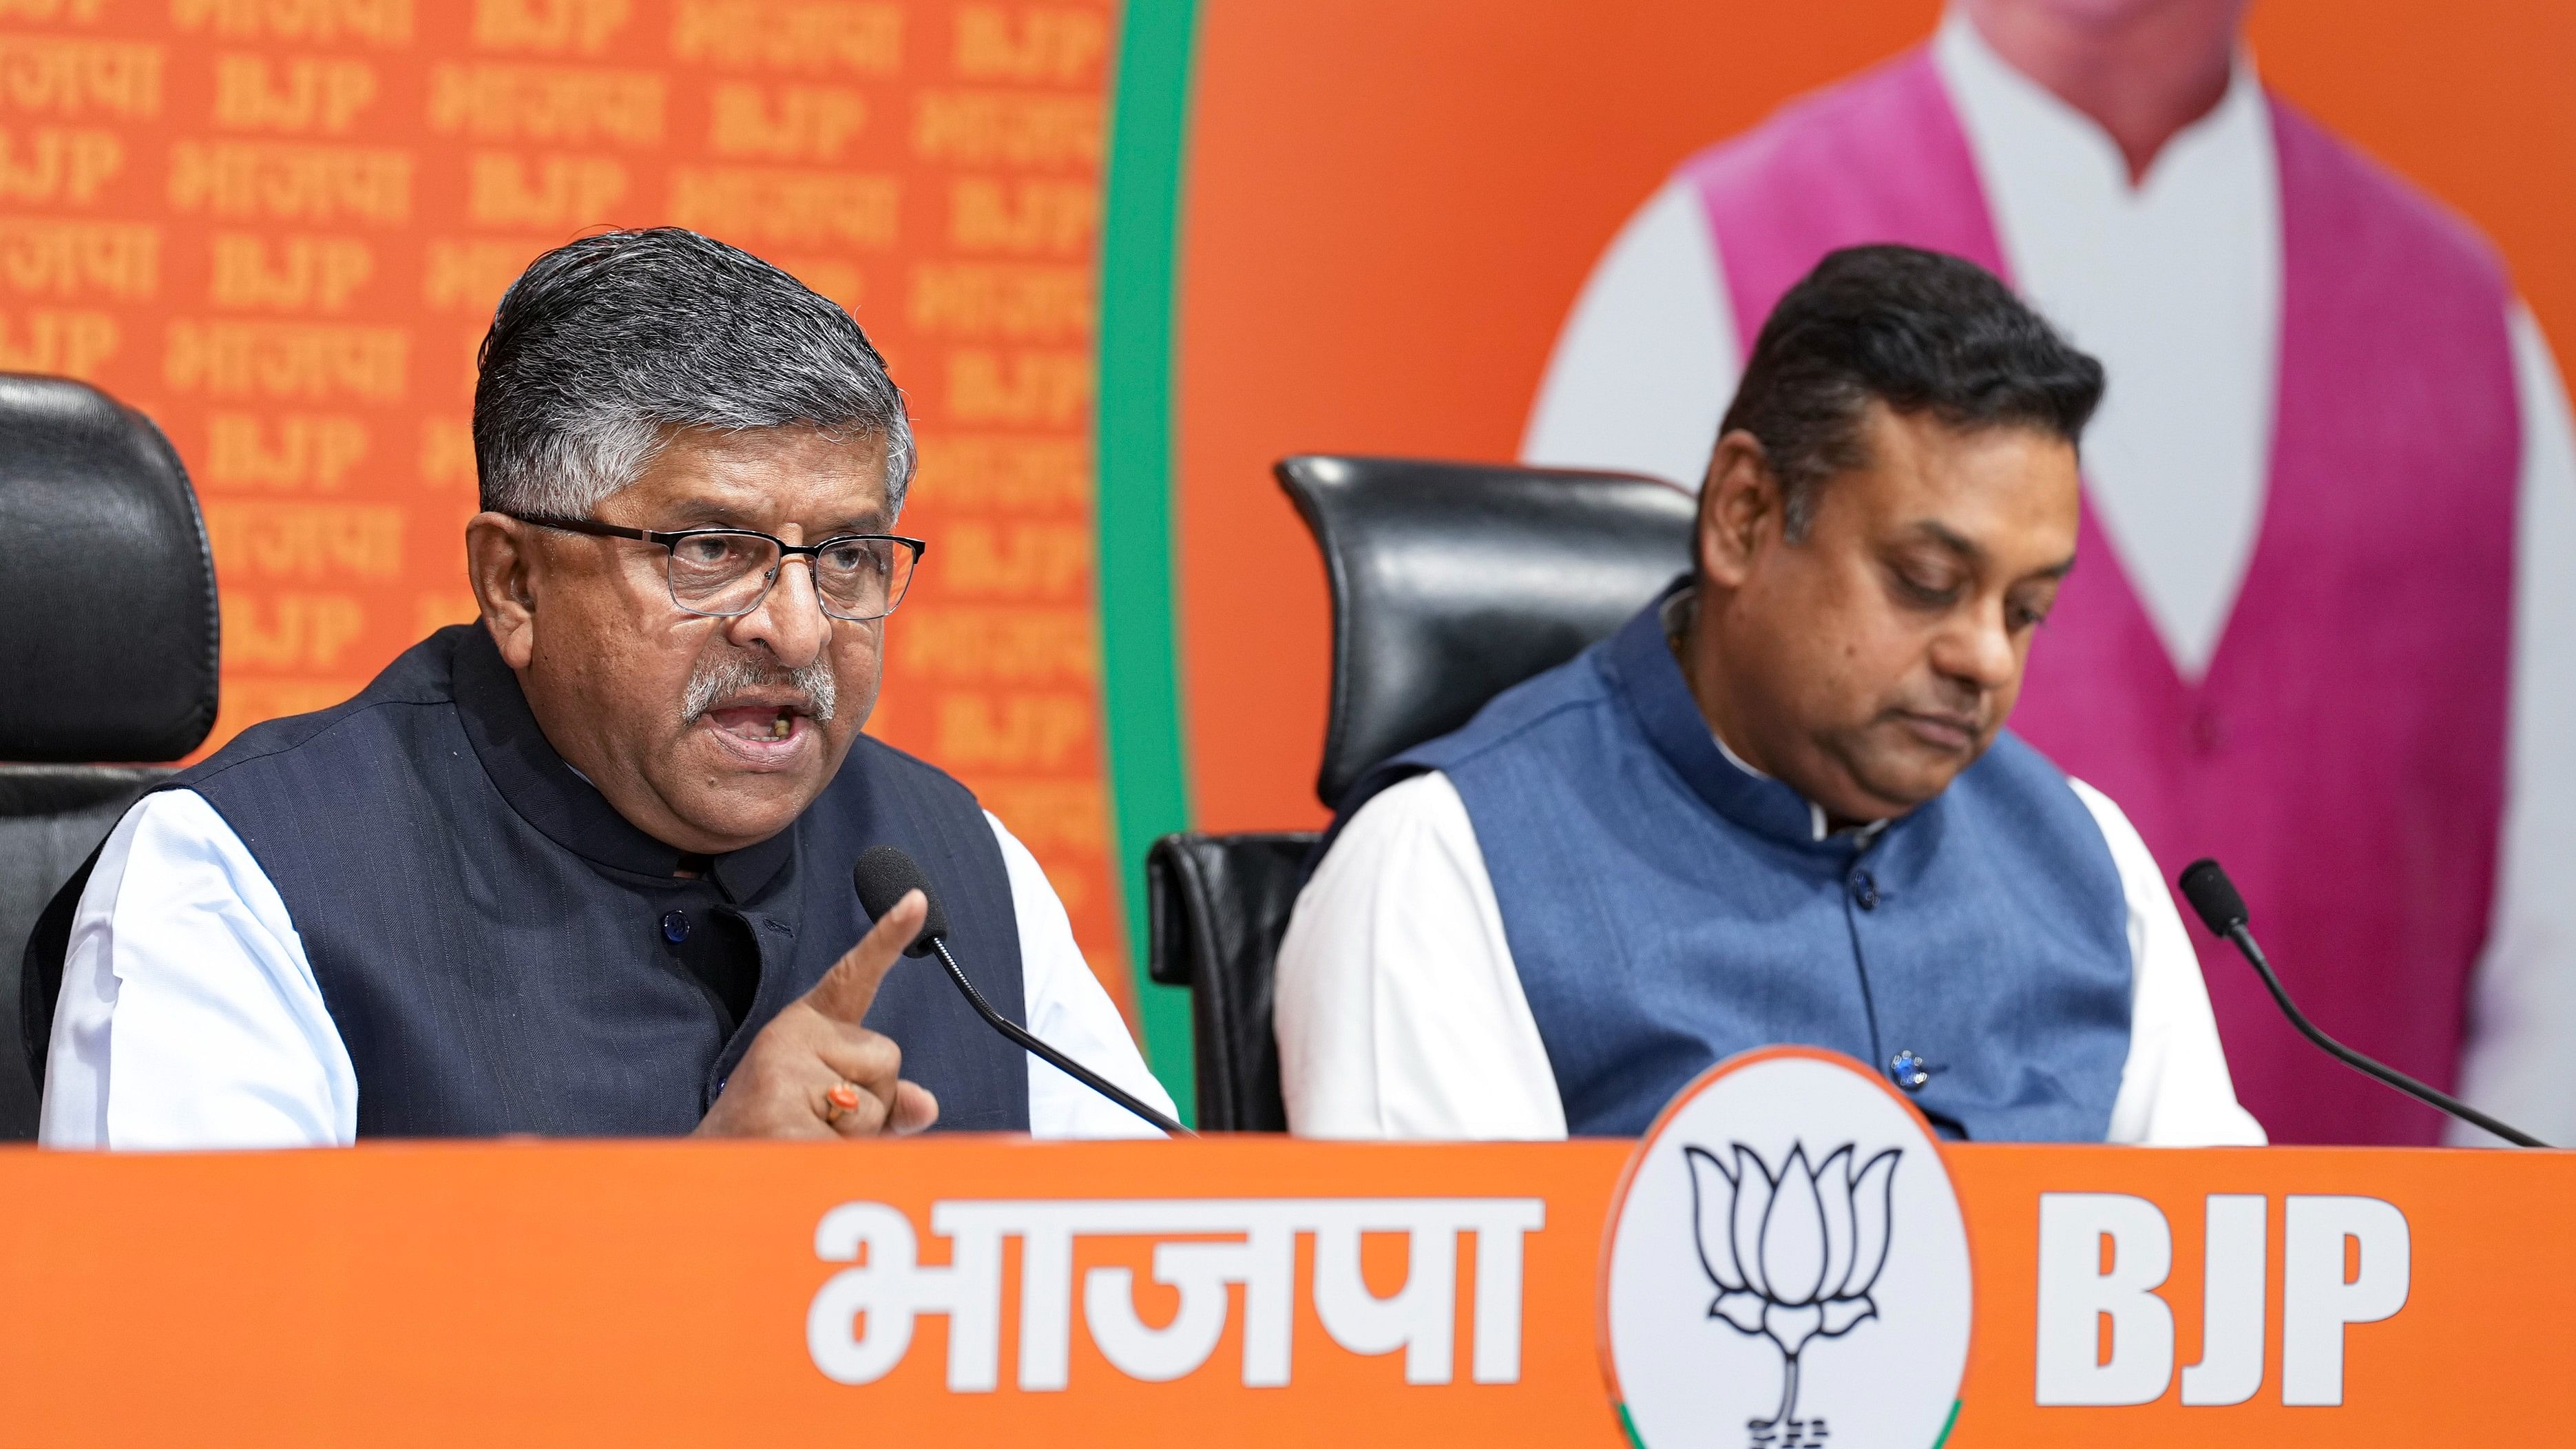 <div class="paragraphs"><p>BJP leaders Ravi Shankar Prasad and Sambit Patra address a press conference at party headquarters, in New Delhi, on Thursday.</p></div>